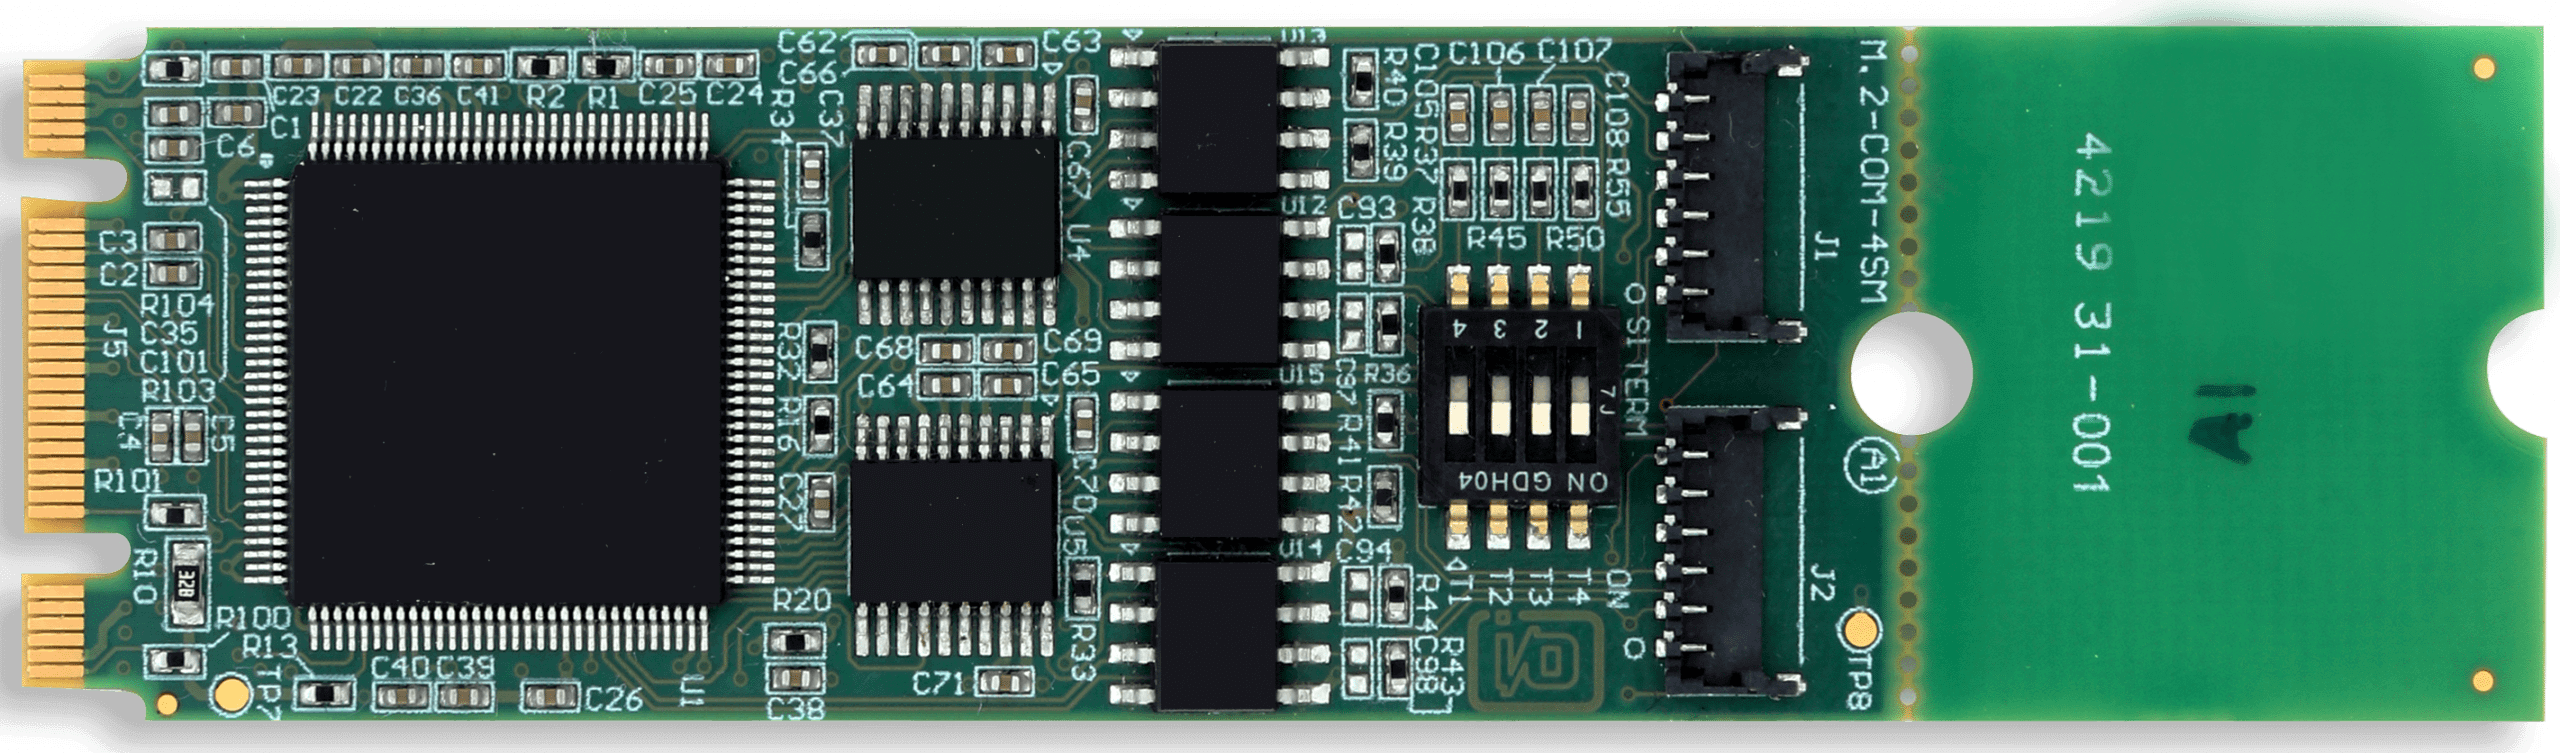 WARRANTY ACCES PCI-DIO-120 PCI-X 120-BIT CHANNEL DIGITAL I/O CARD 96c/48s/32hs 